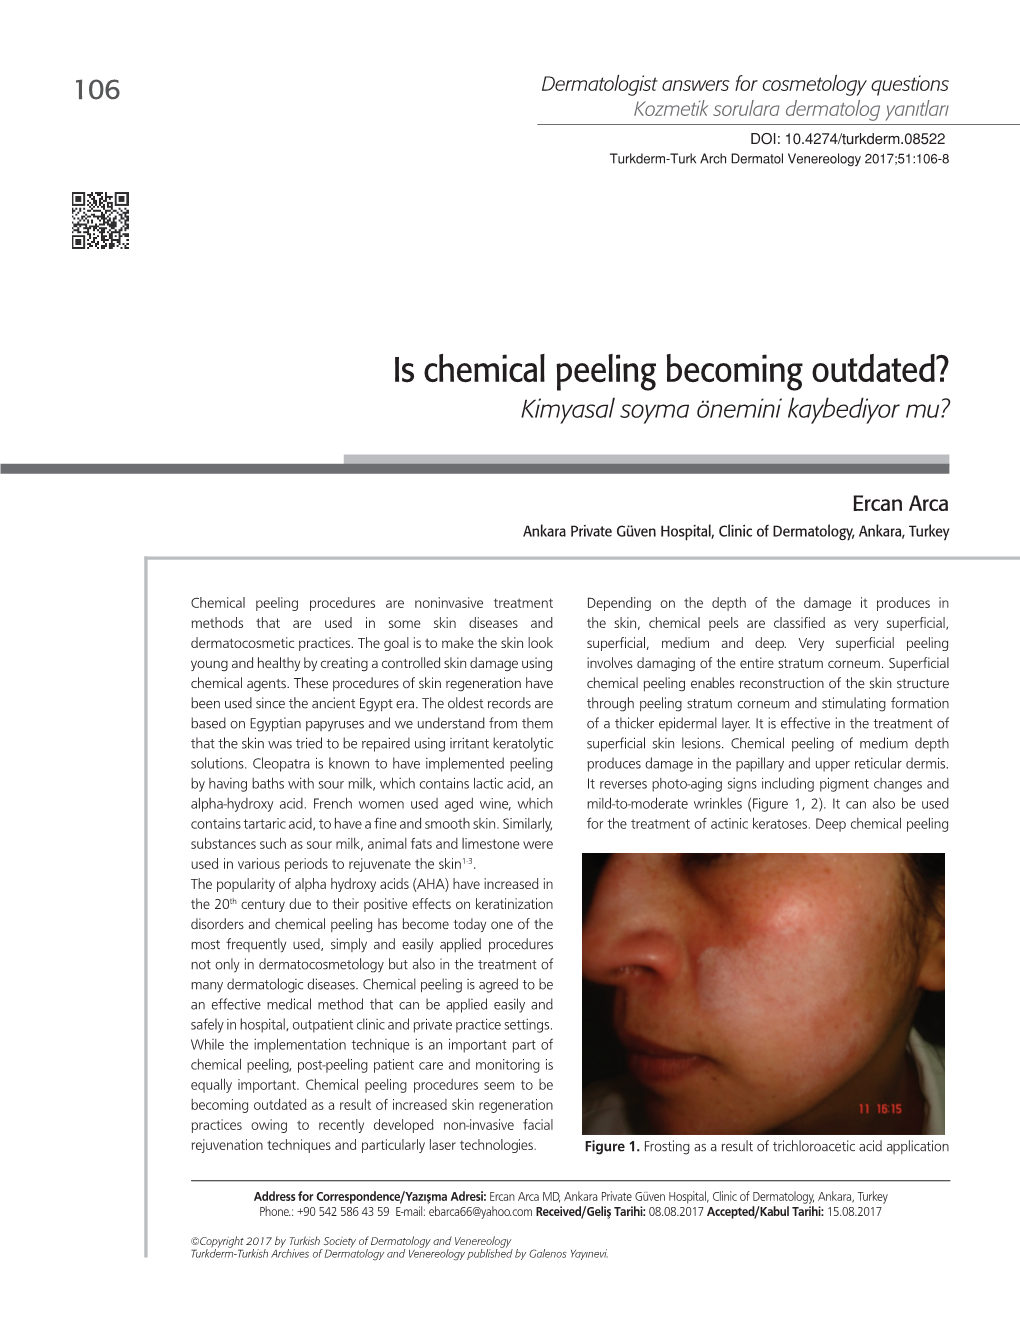 Is Chemical Peeling Becoming Outdated? Kimyasal Soyma Önemini Kaybediyor Mu?